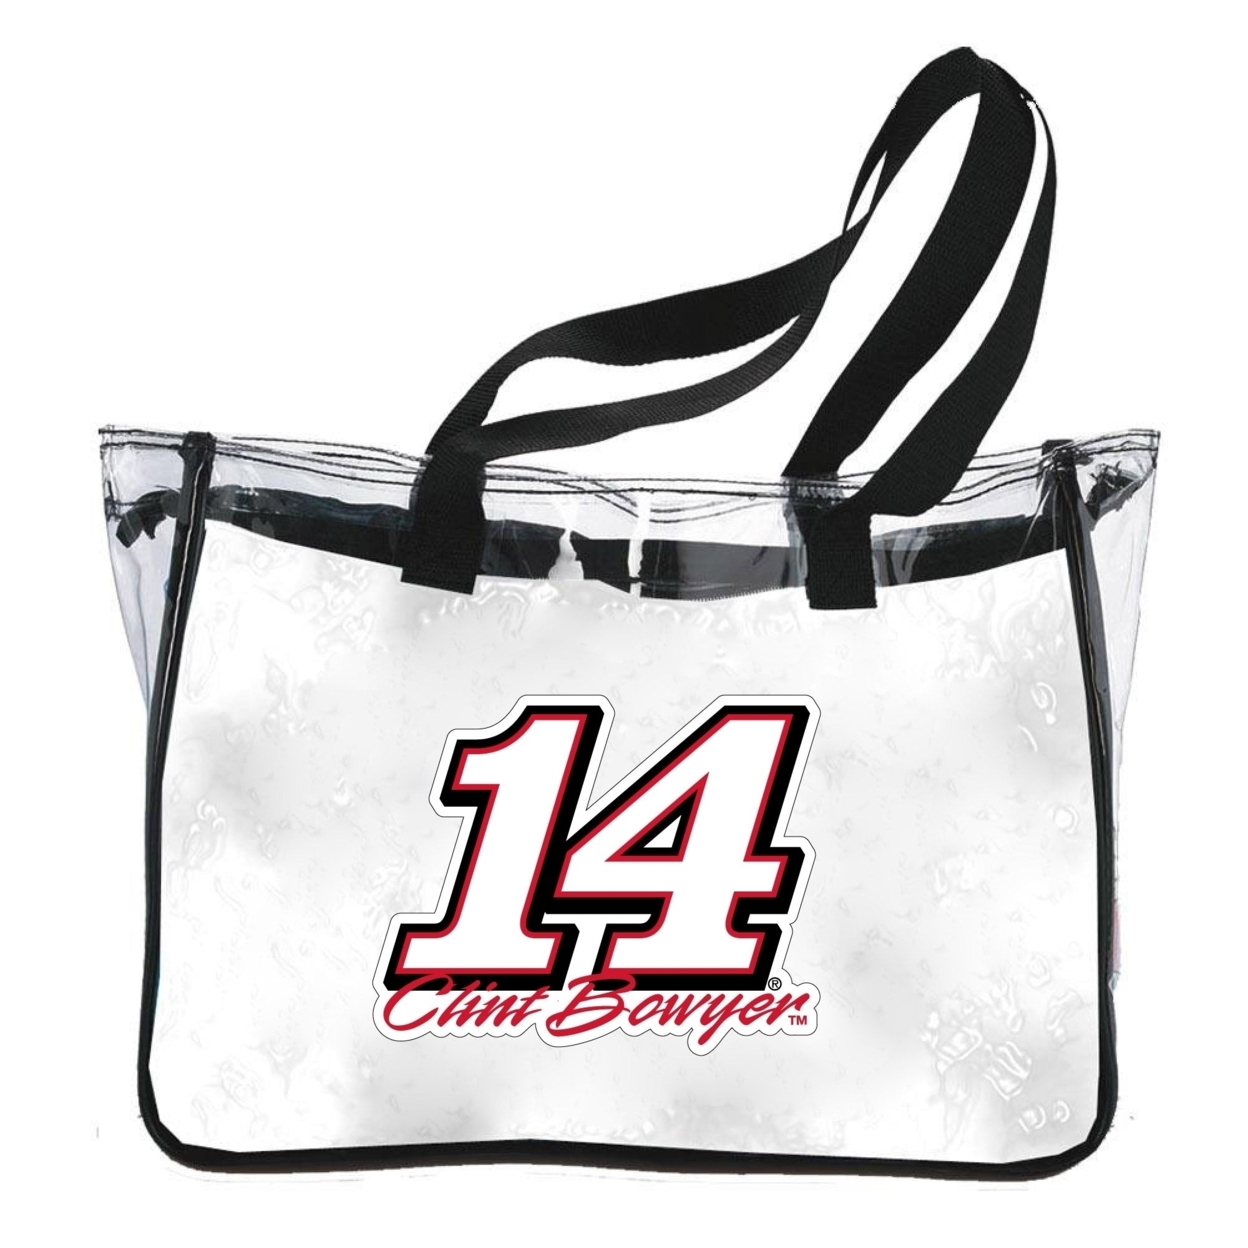 CB Clint Bowyer #14 NASCAR Plastic Clear Tote Bag